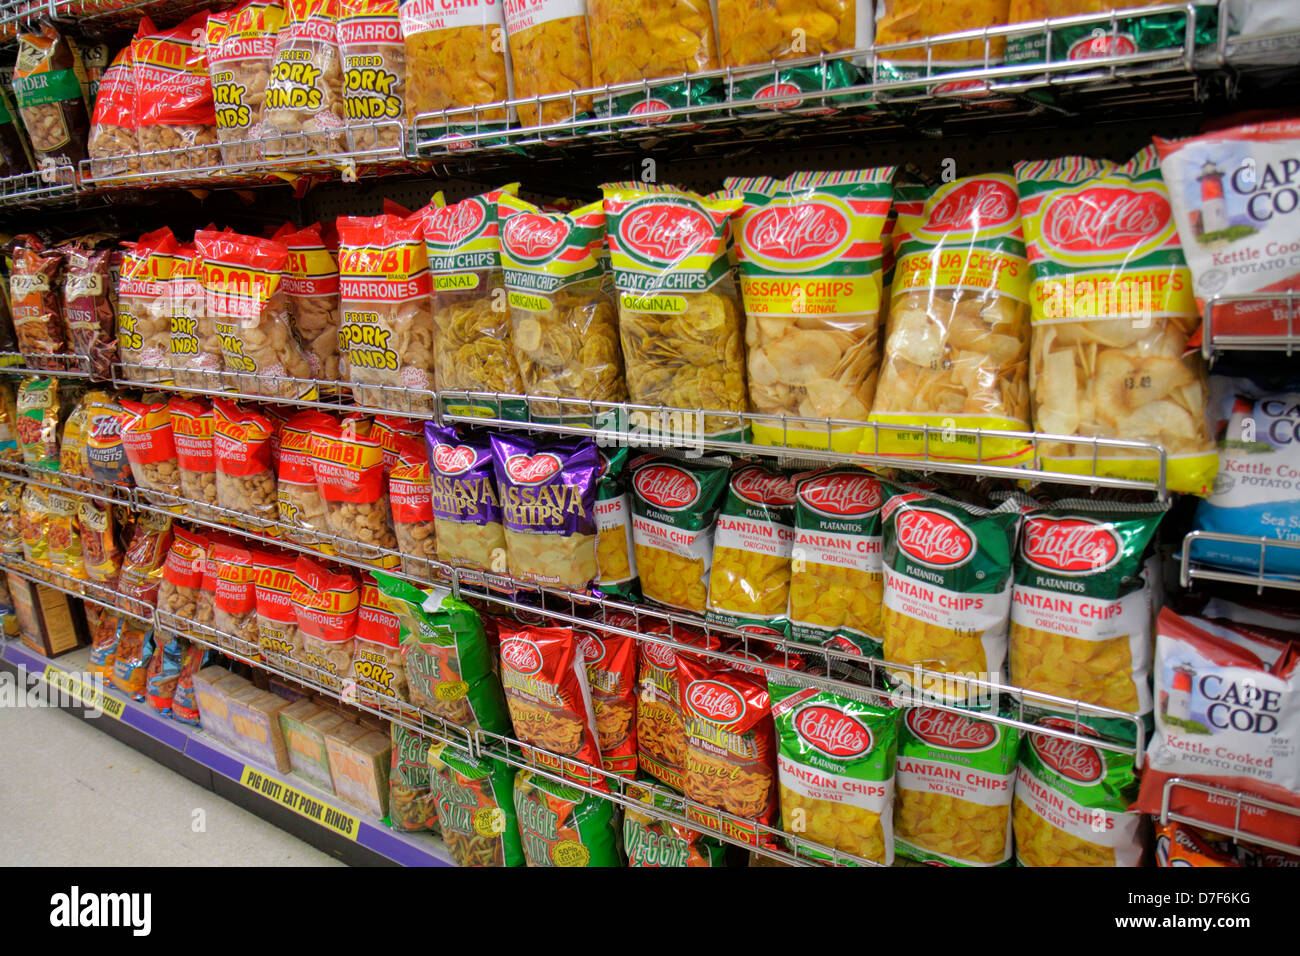 Miami Beach Florida,Walgreens,pharmacy,drugstore,shelf shelves,display case sale,brands display sale chips,plantain,potato,junk food,snack,snacks,snac Stock Photo